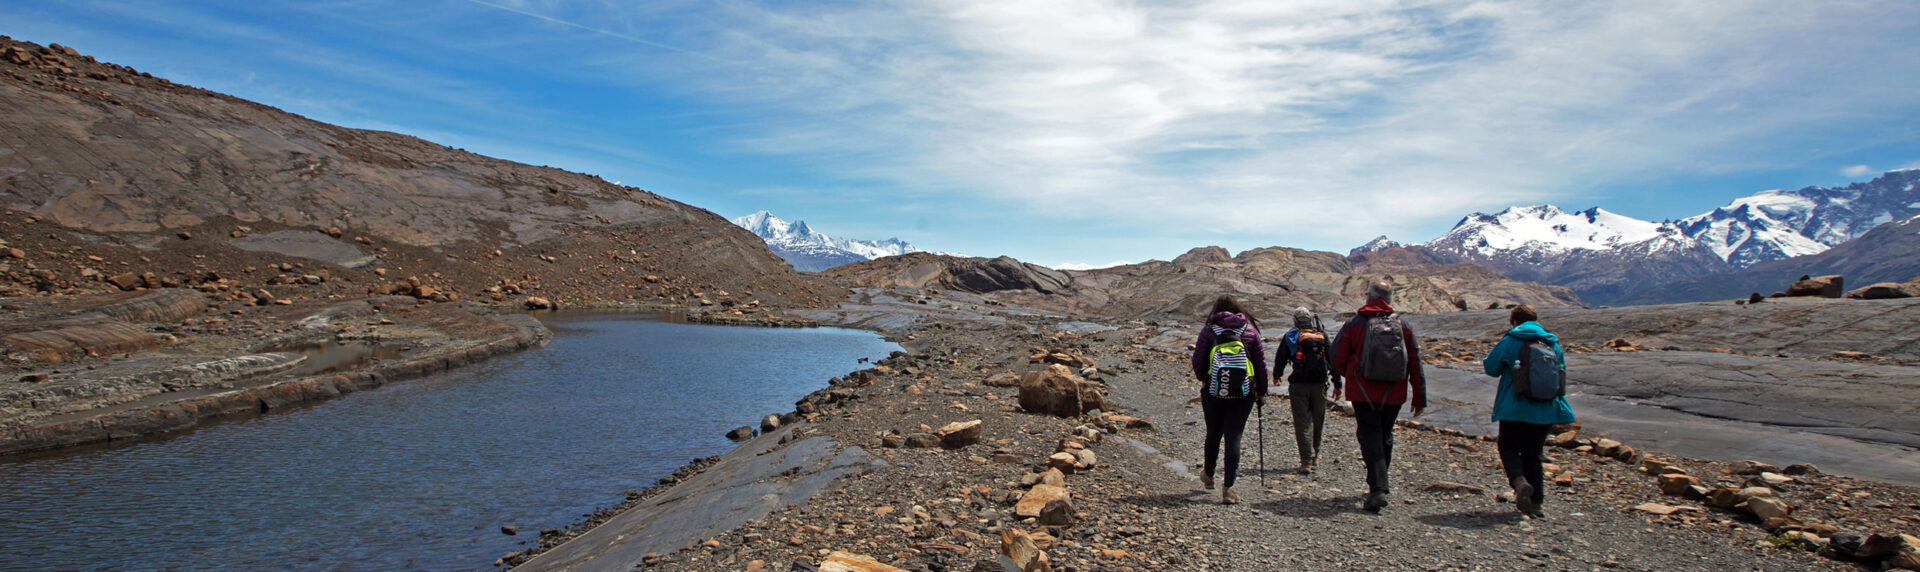 Patagonie Reizen Atacama Argentinie 24